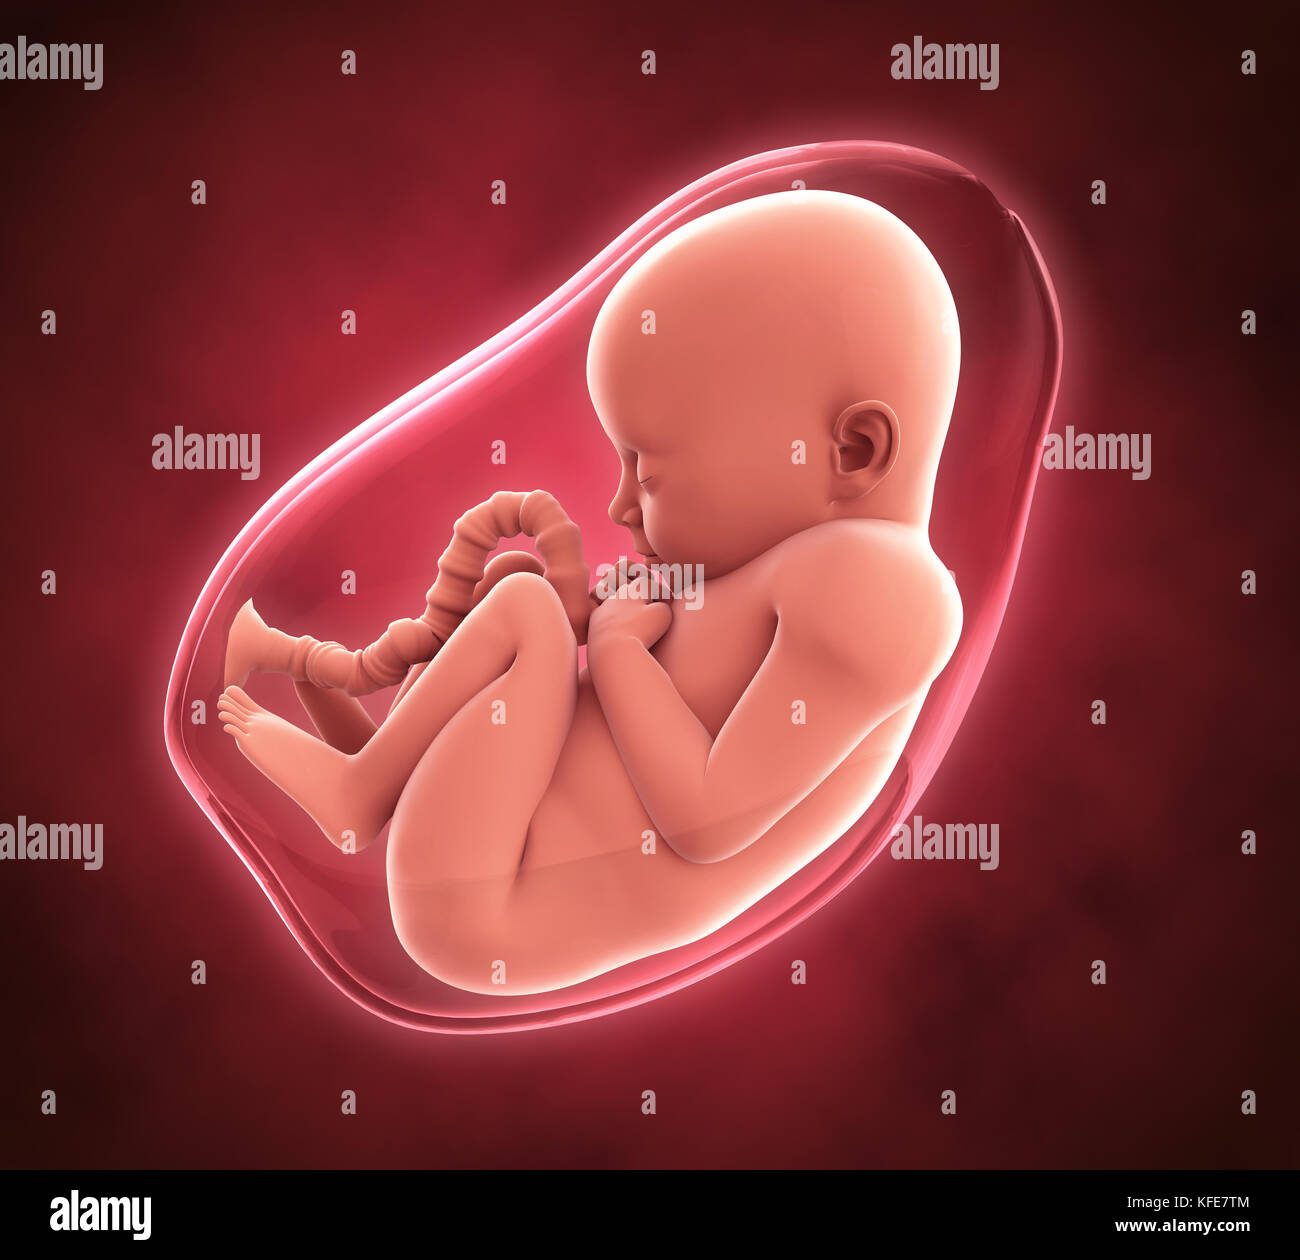 Human Fetus Illustration Stock Photo